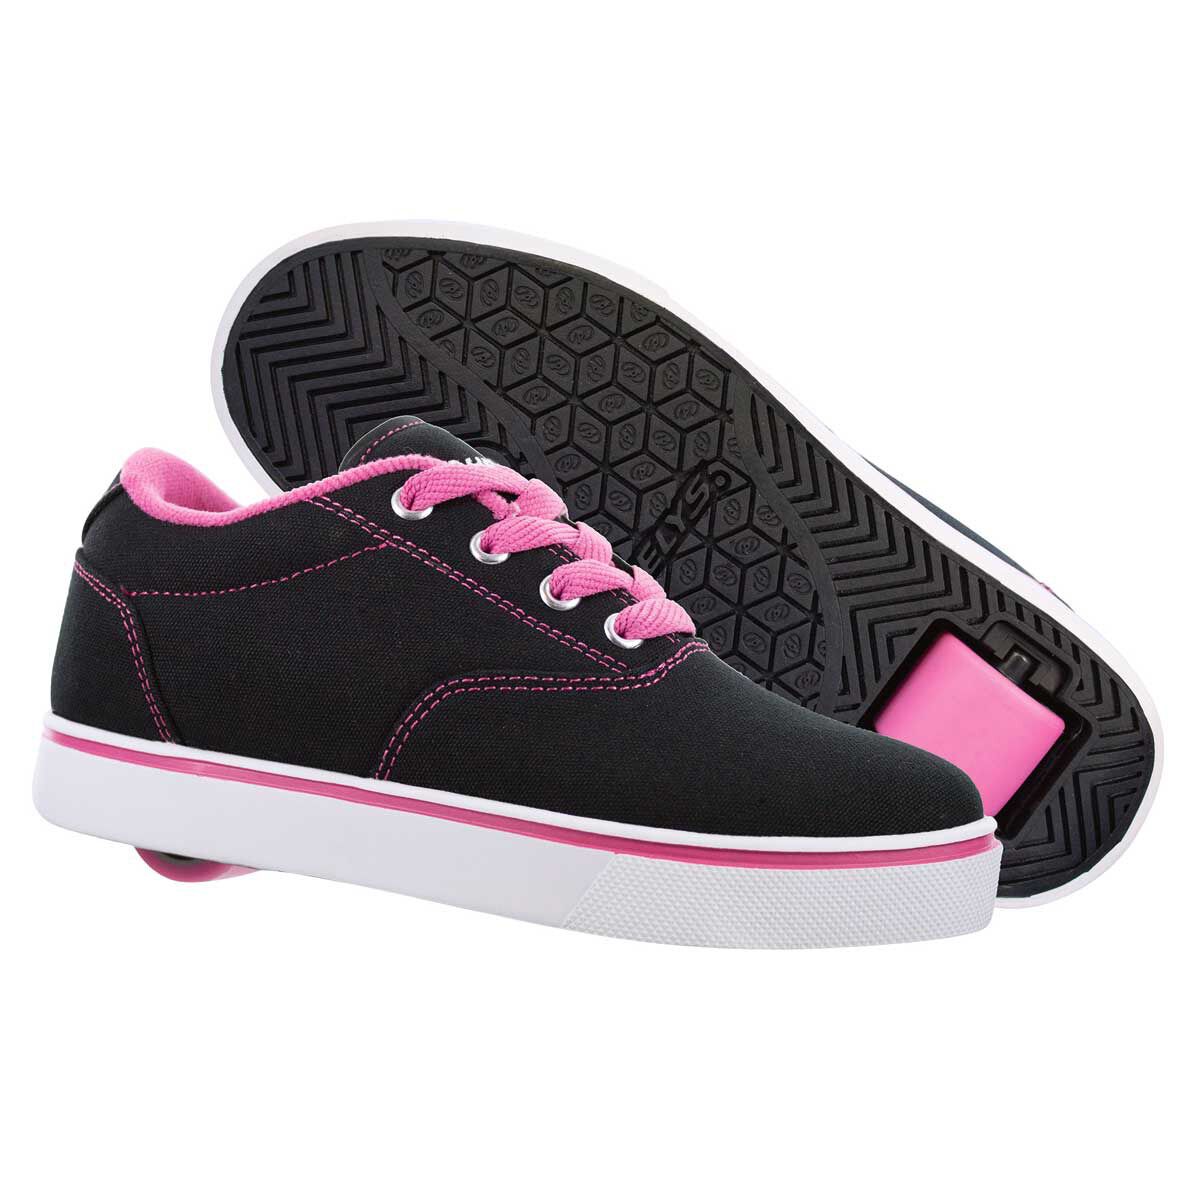 Heelys Launch Girls Shoes Black / Pink 